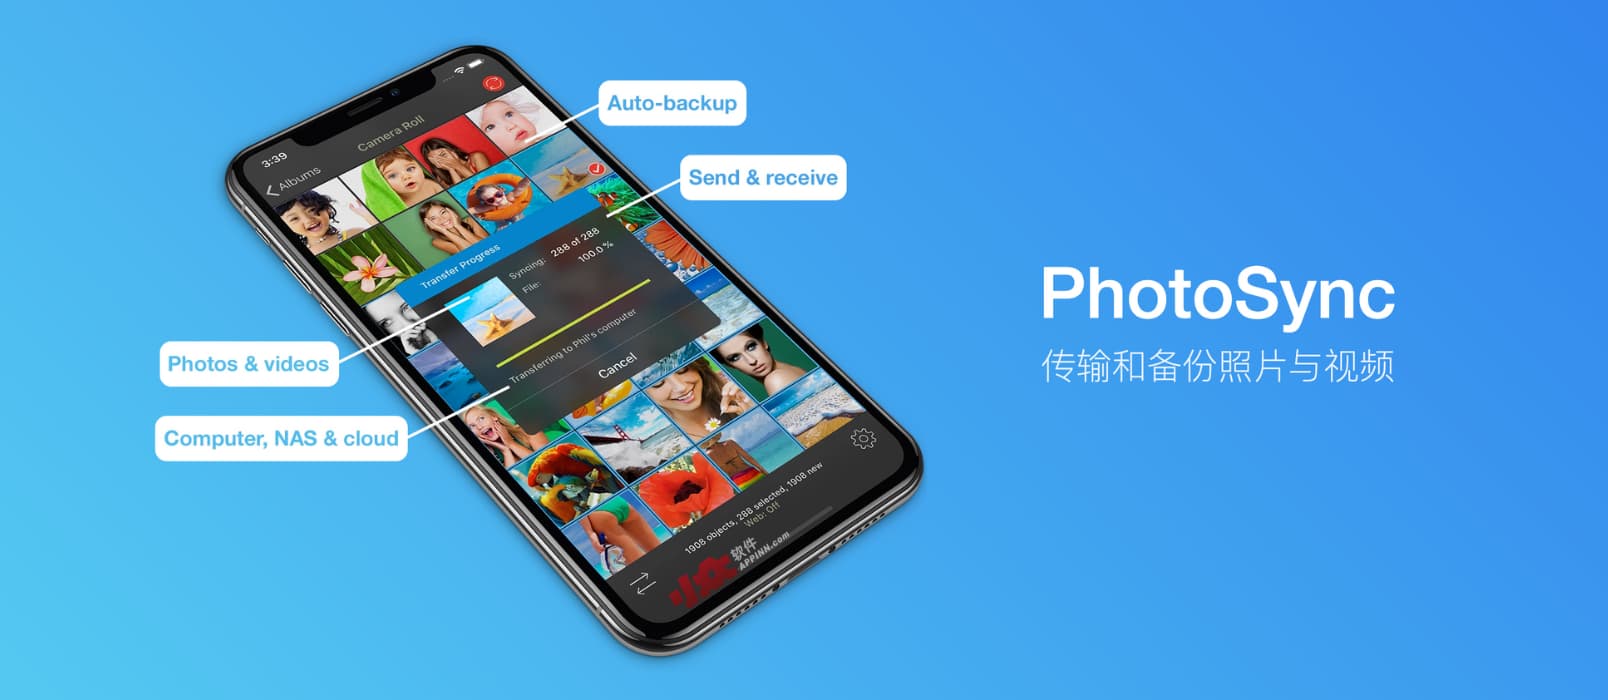 PhotoSync - 可能是 iPhone、Android 最好的图片视频备份软件